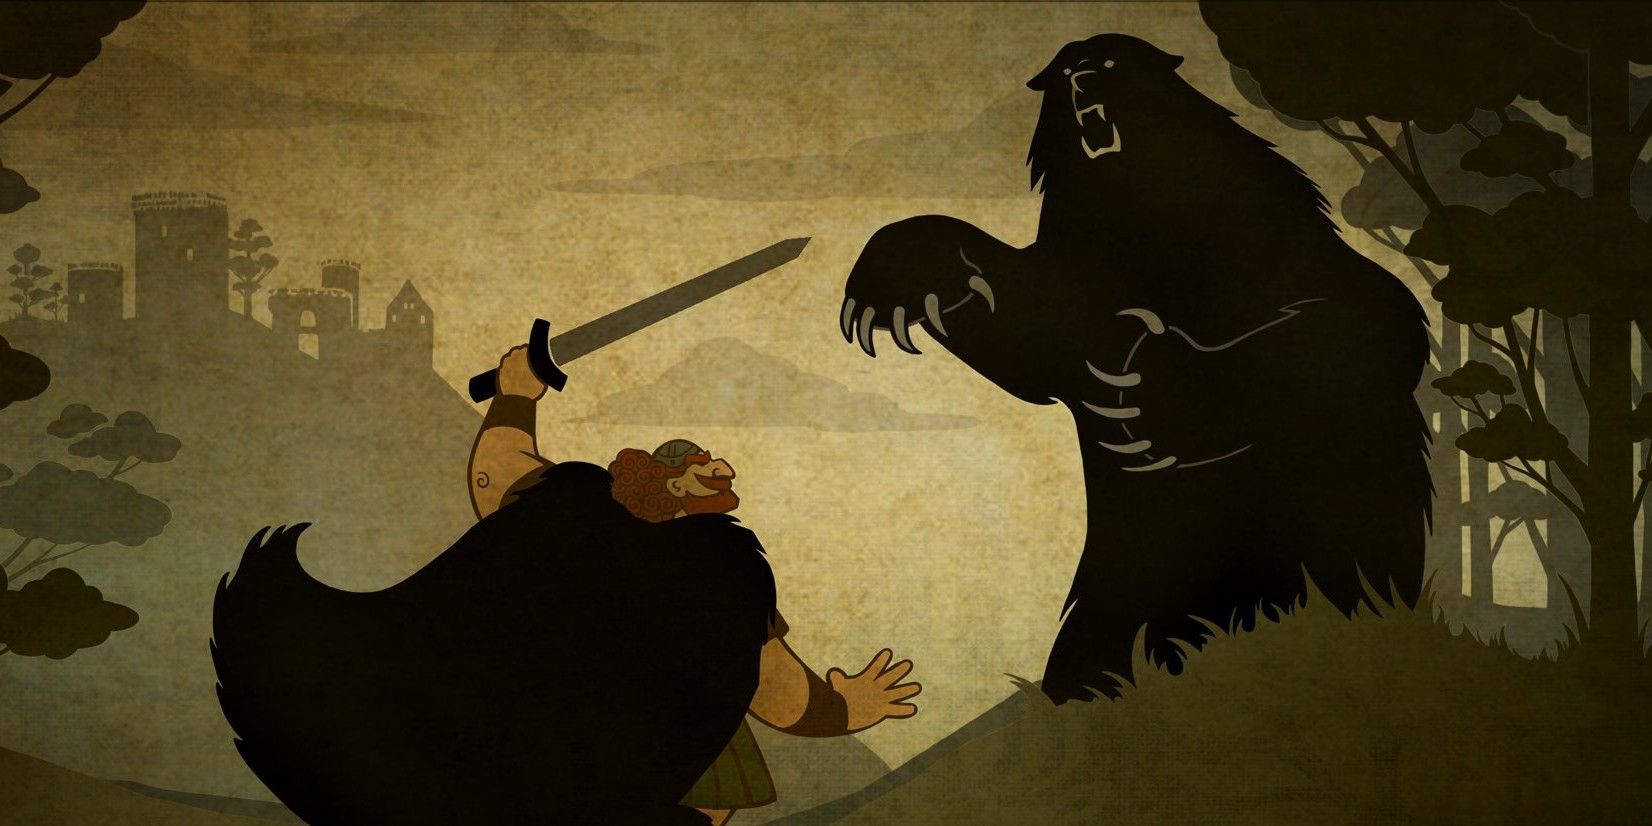 mordu fights meridas dad in Brave